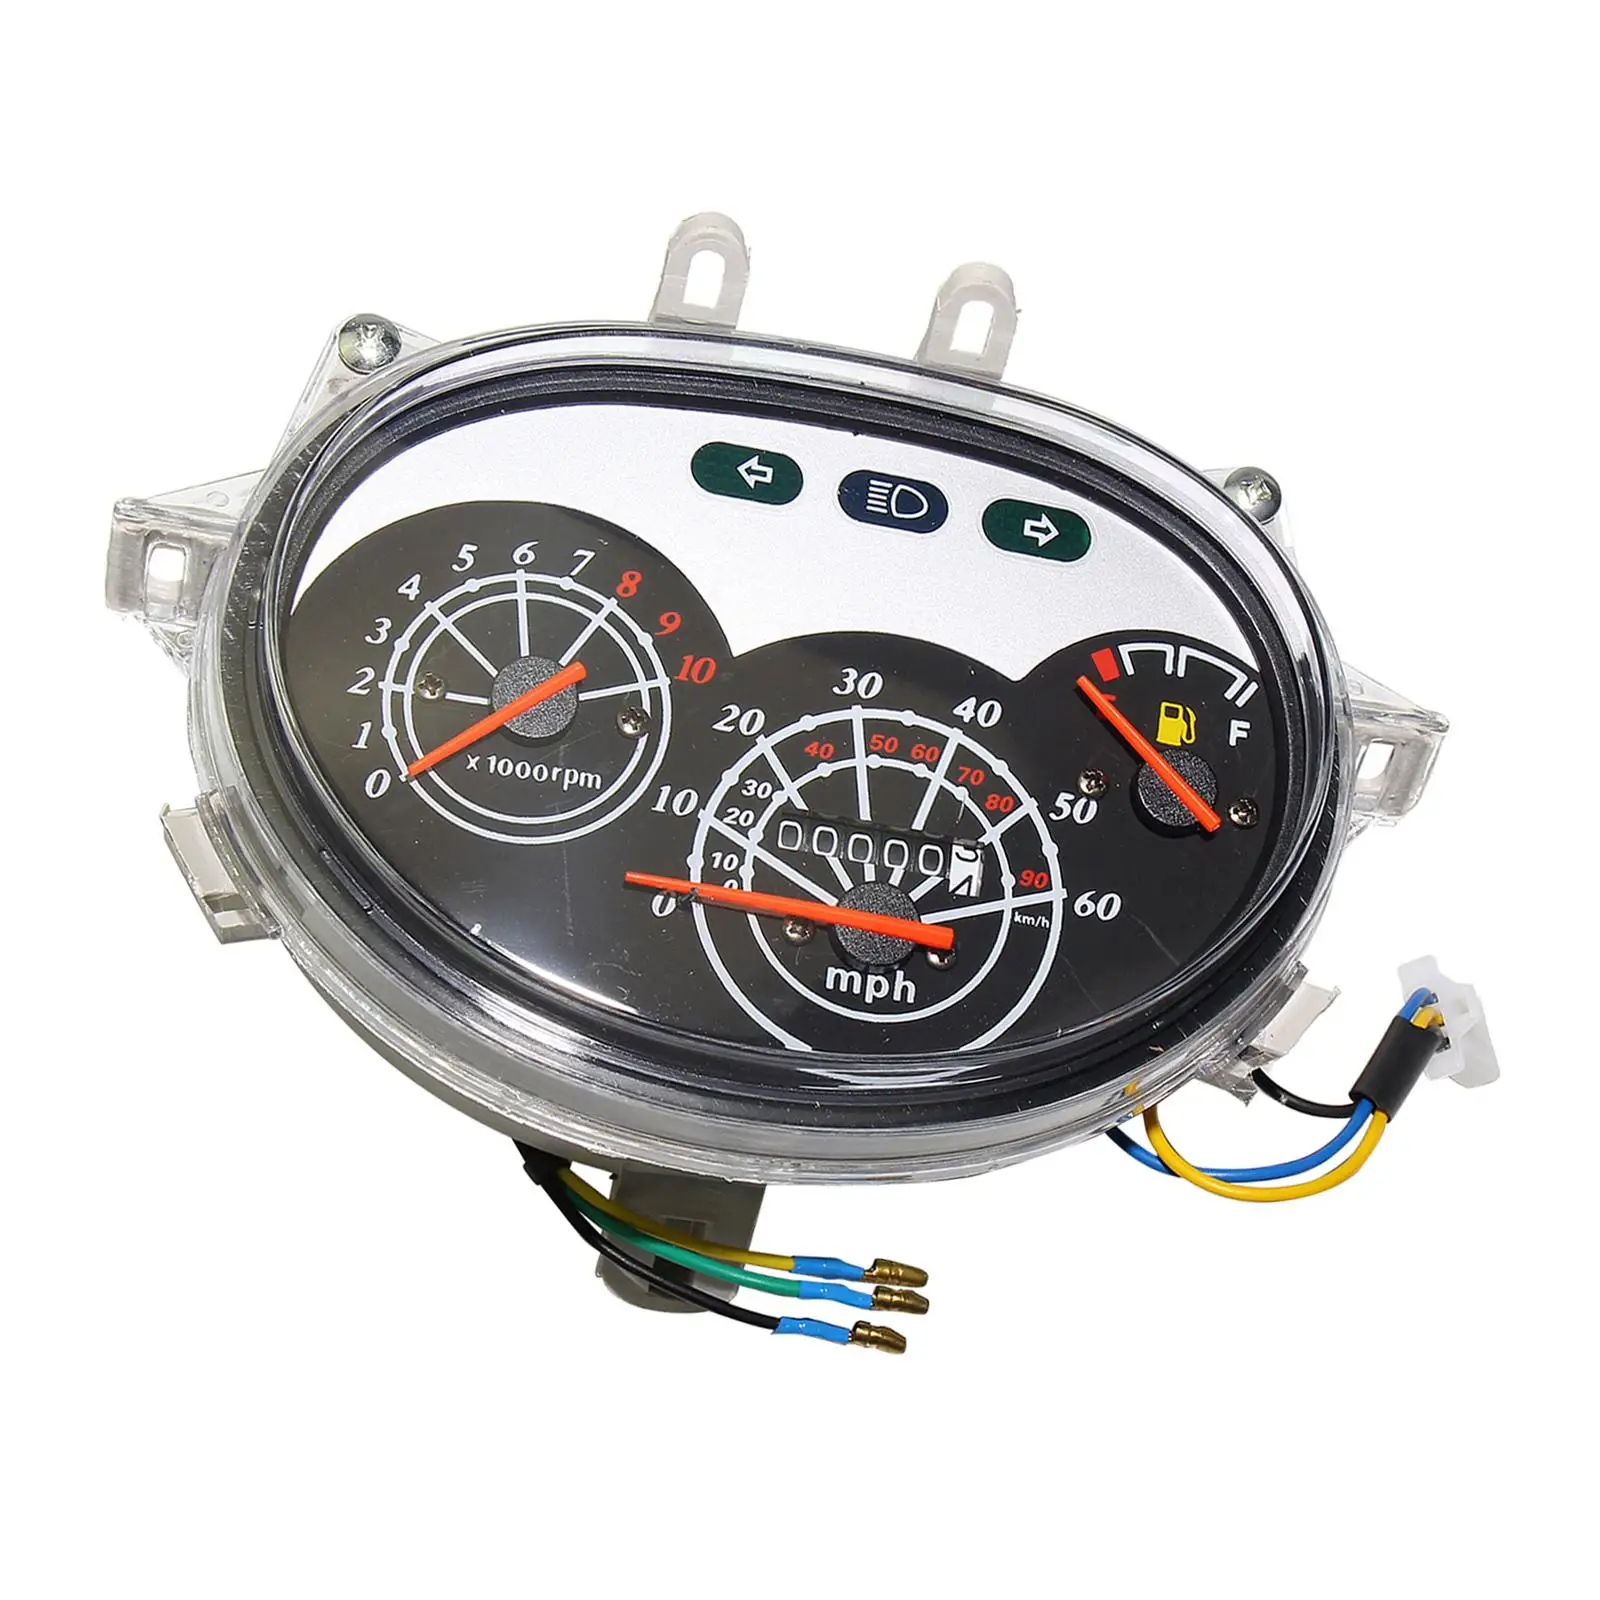 Motorcycle Dashboard Speedometer Multi Function Speed Instrument Gauge Odometer Meter Replace Motorbike Parts Accessories